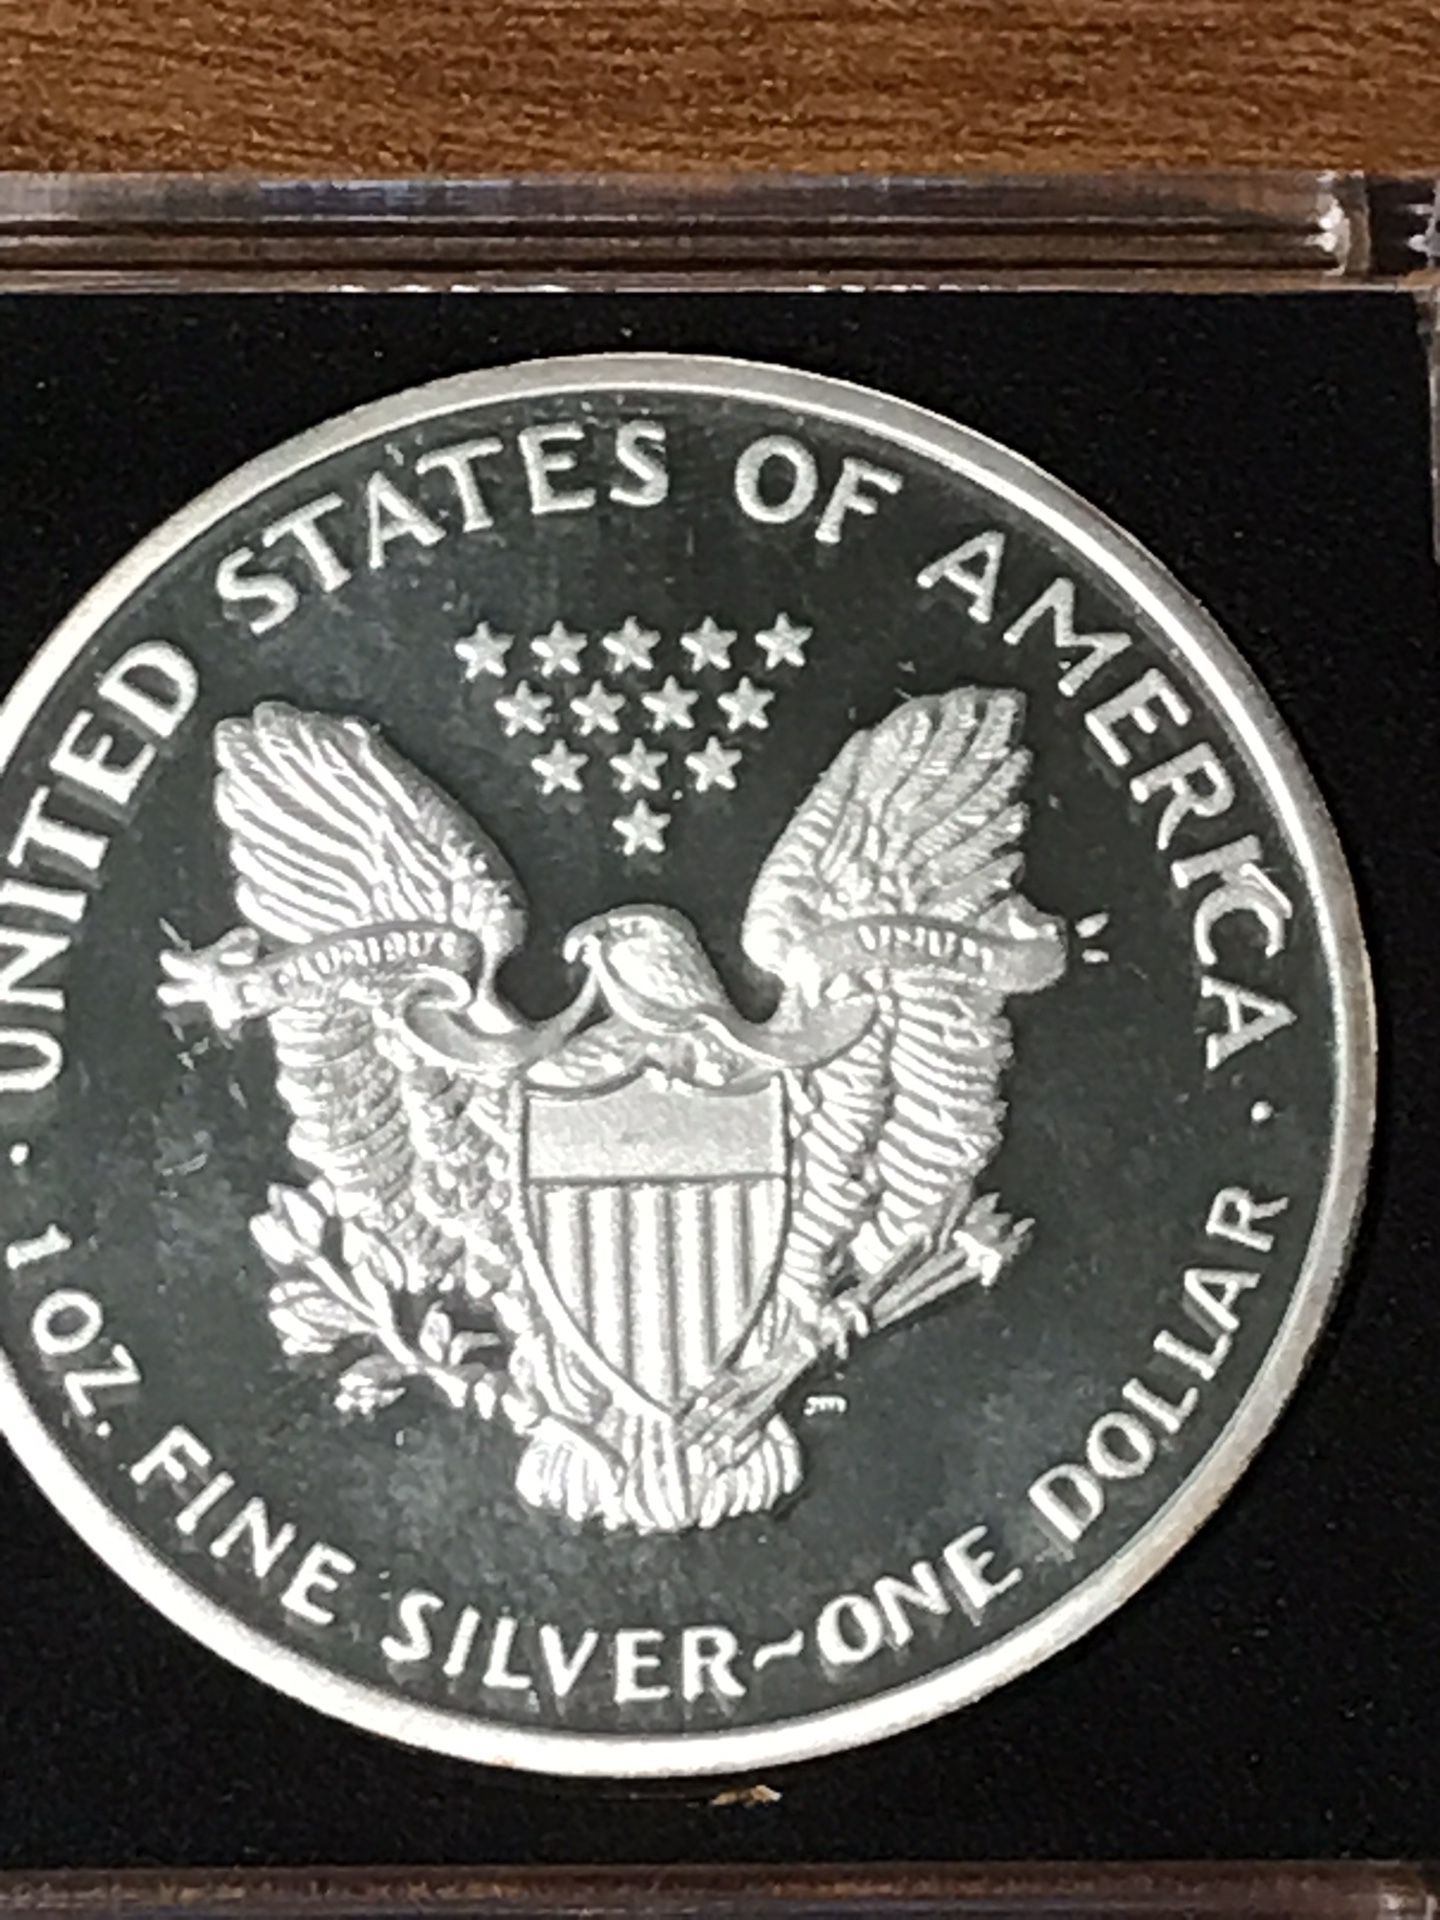 2013 American eagle coin